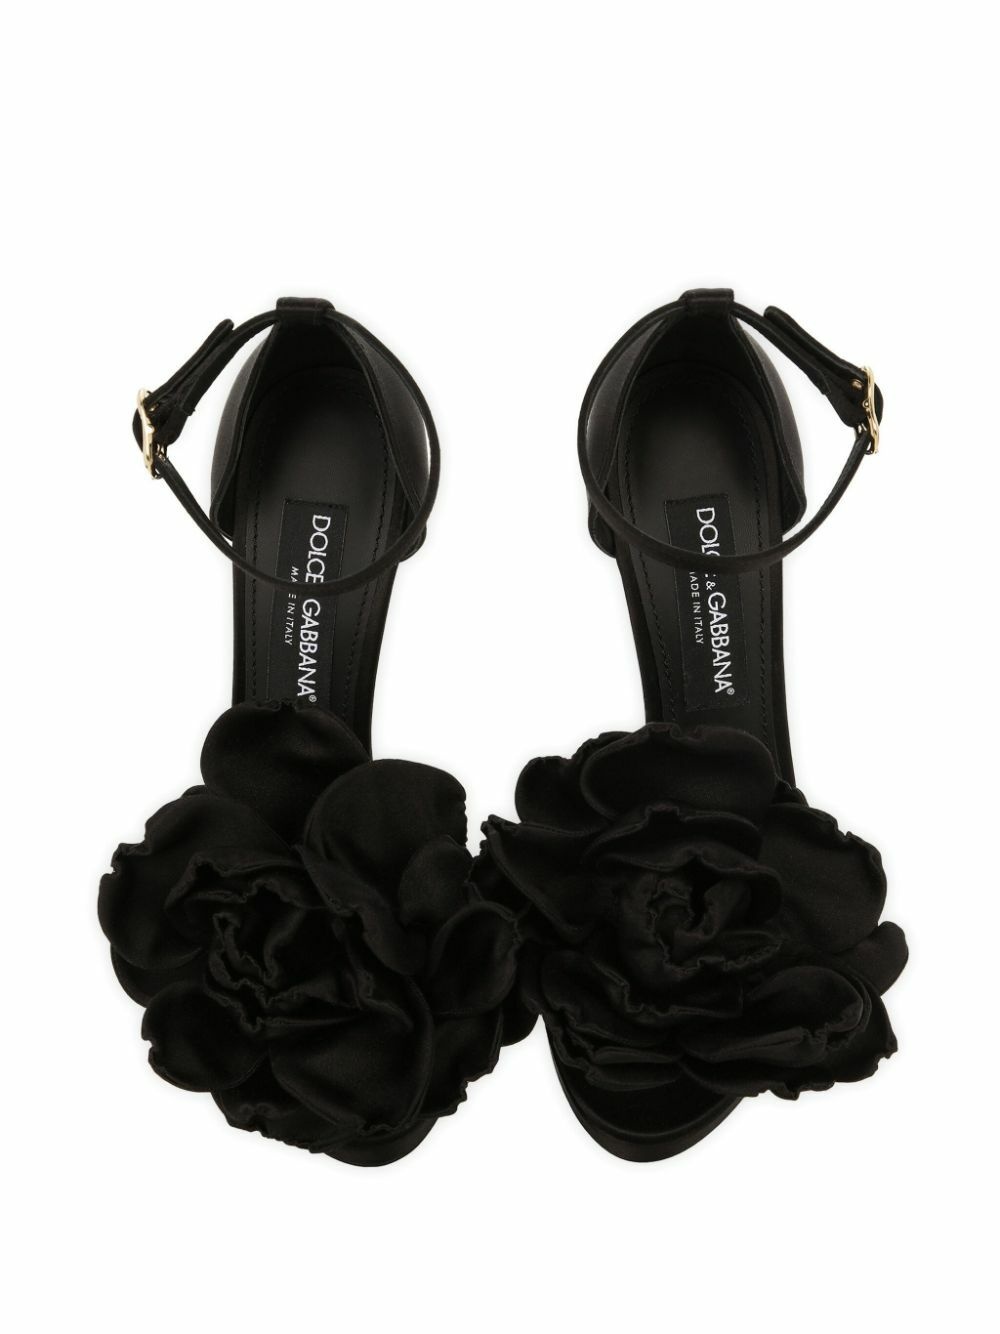 Dolce & Gabbana Sorrento Slip On Black Yellow (Women's) - CK1823AW478 - US